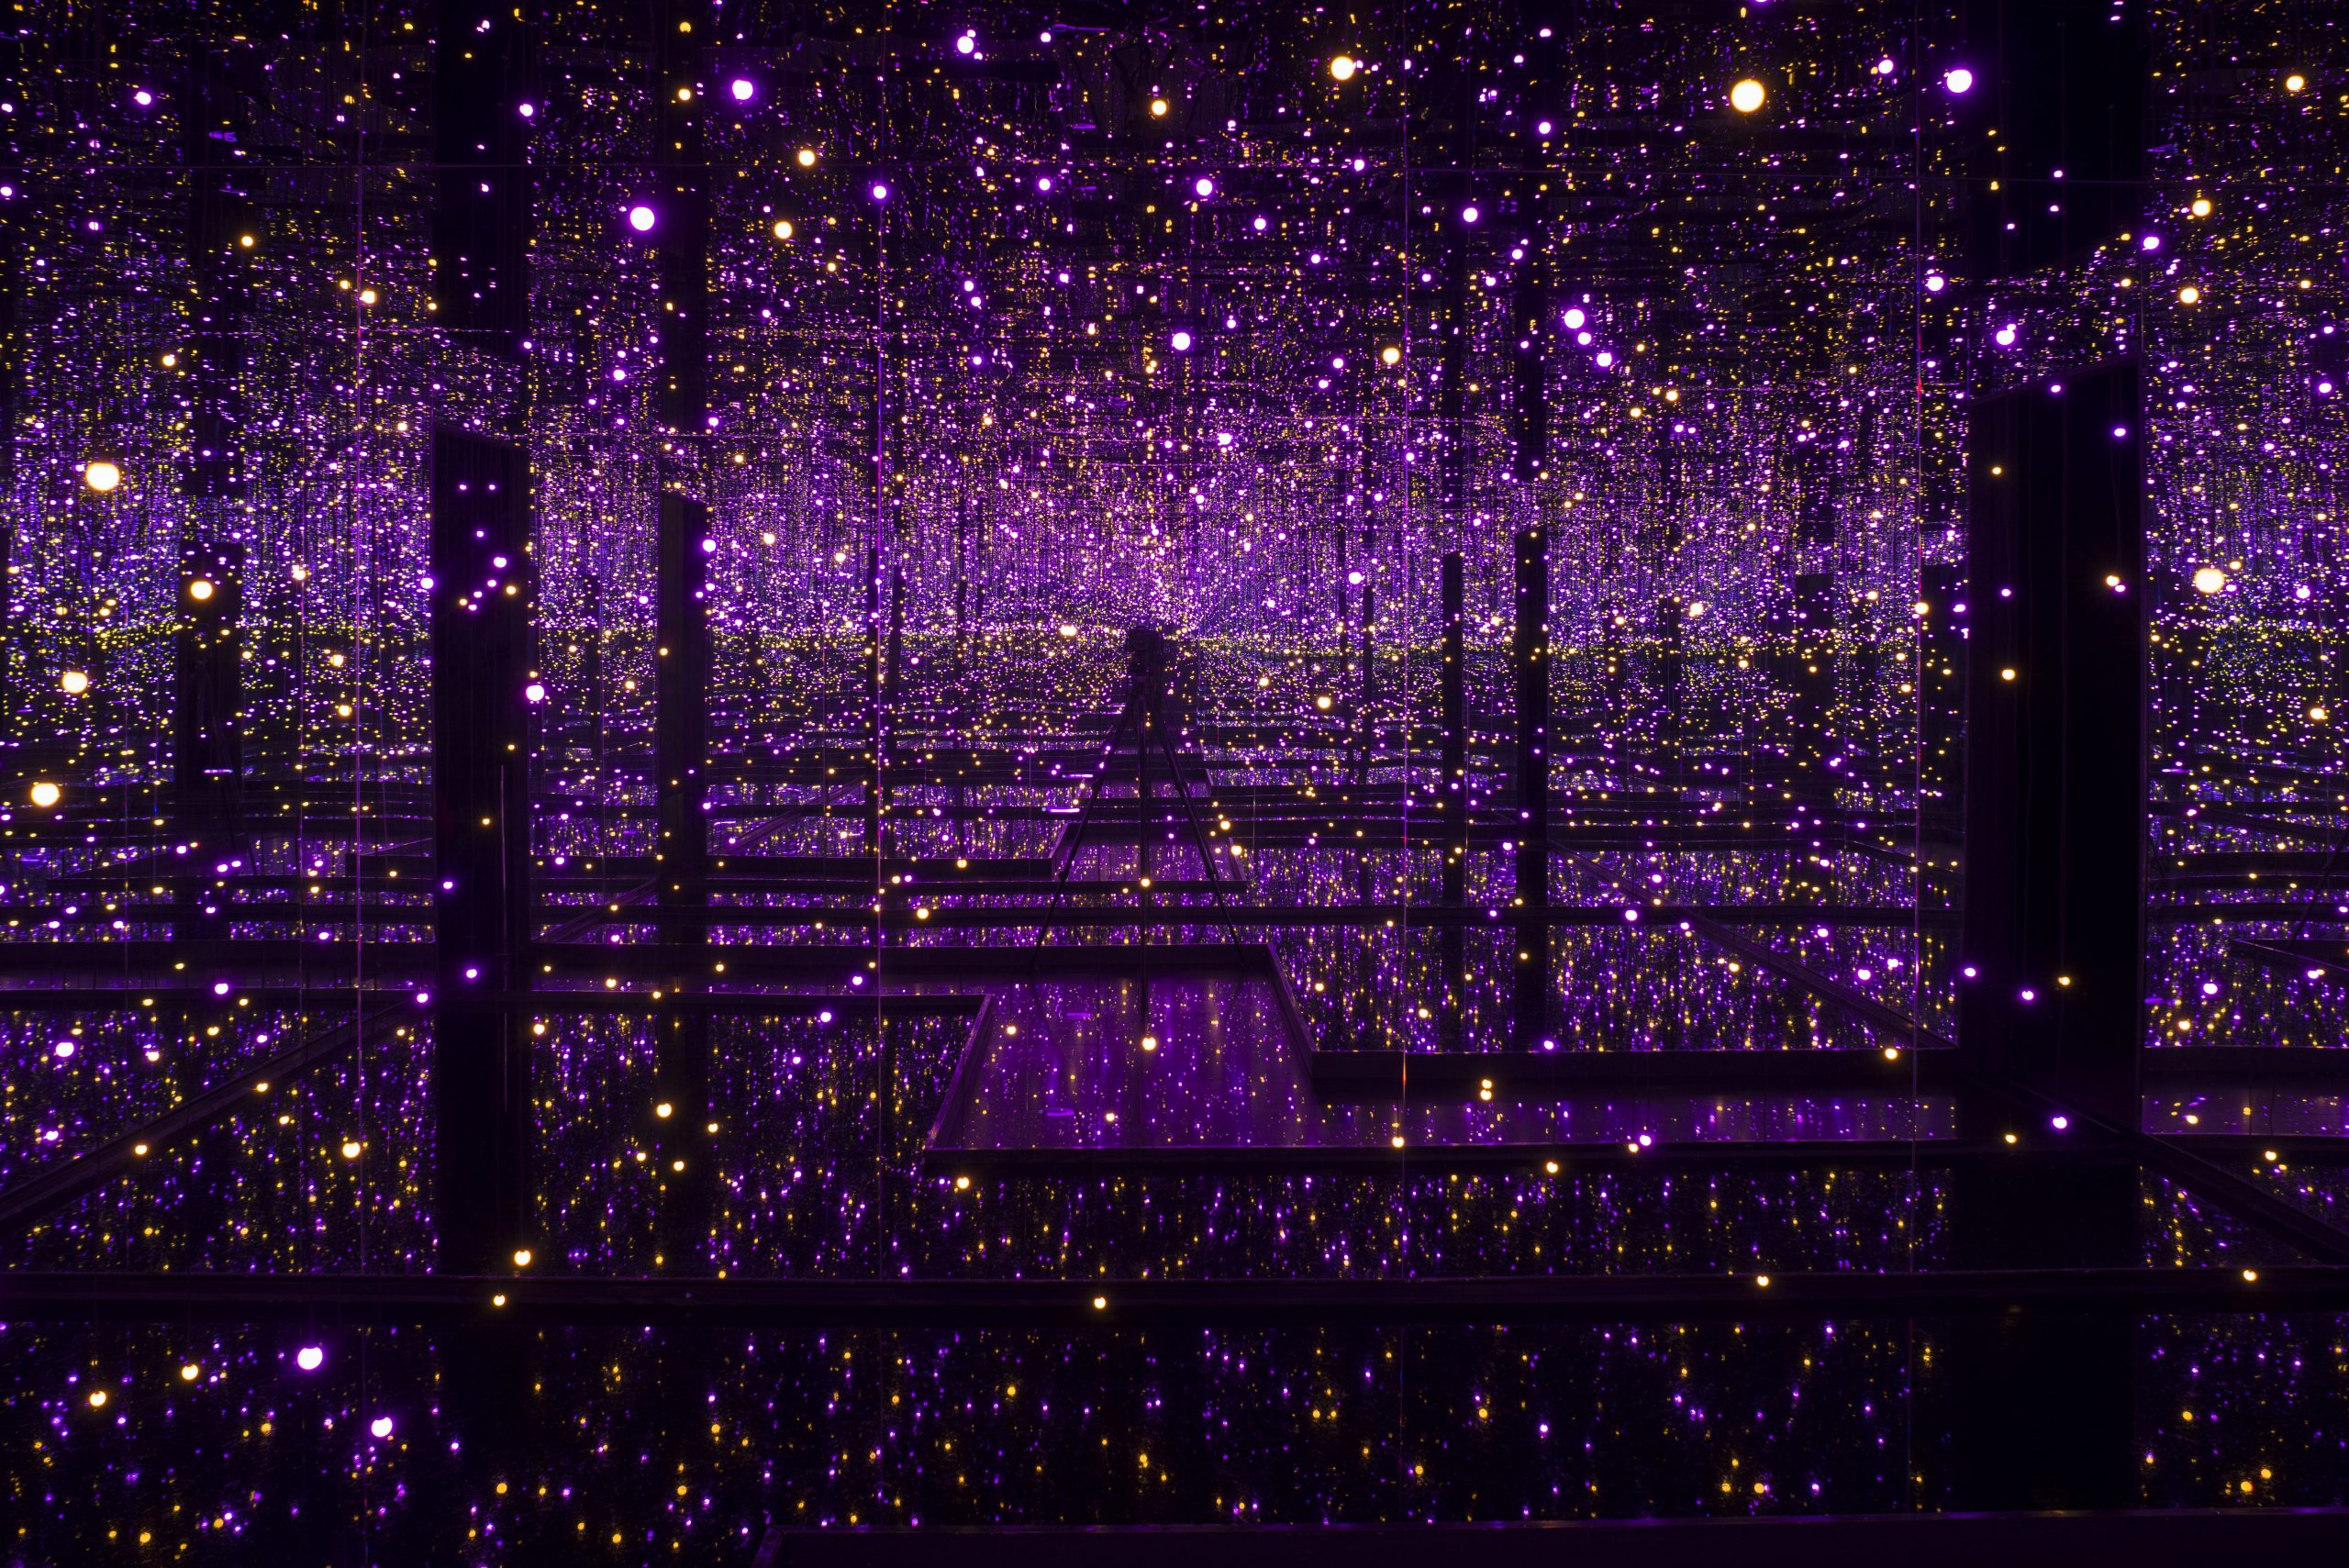 Infinity Mirrored Room, an art installation by Yayoi Kusama